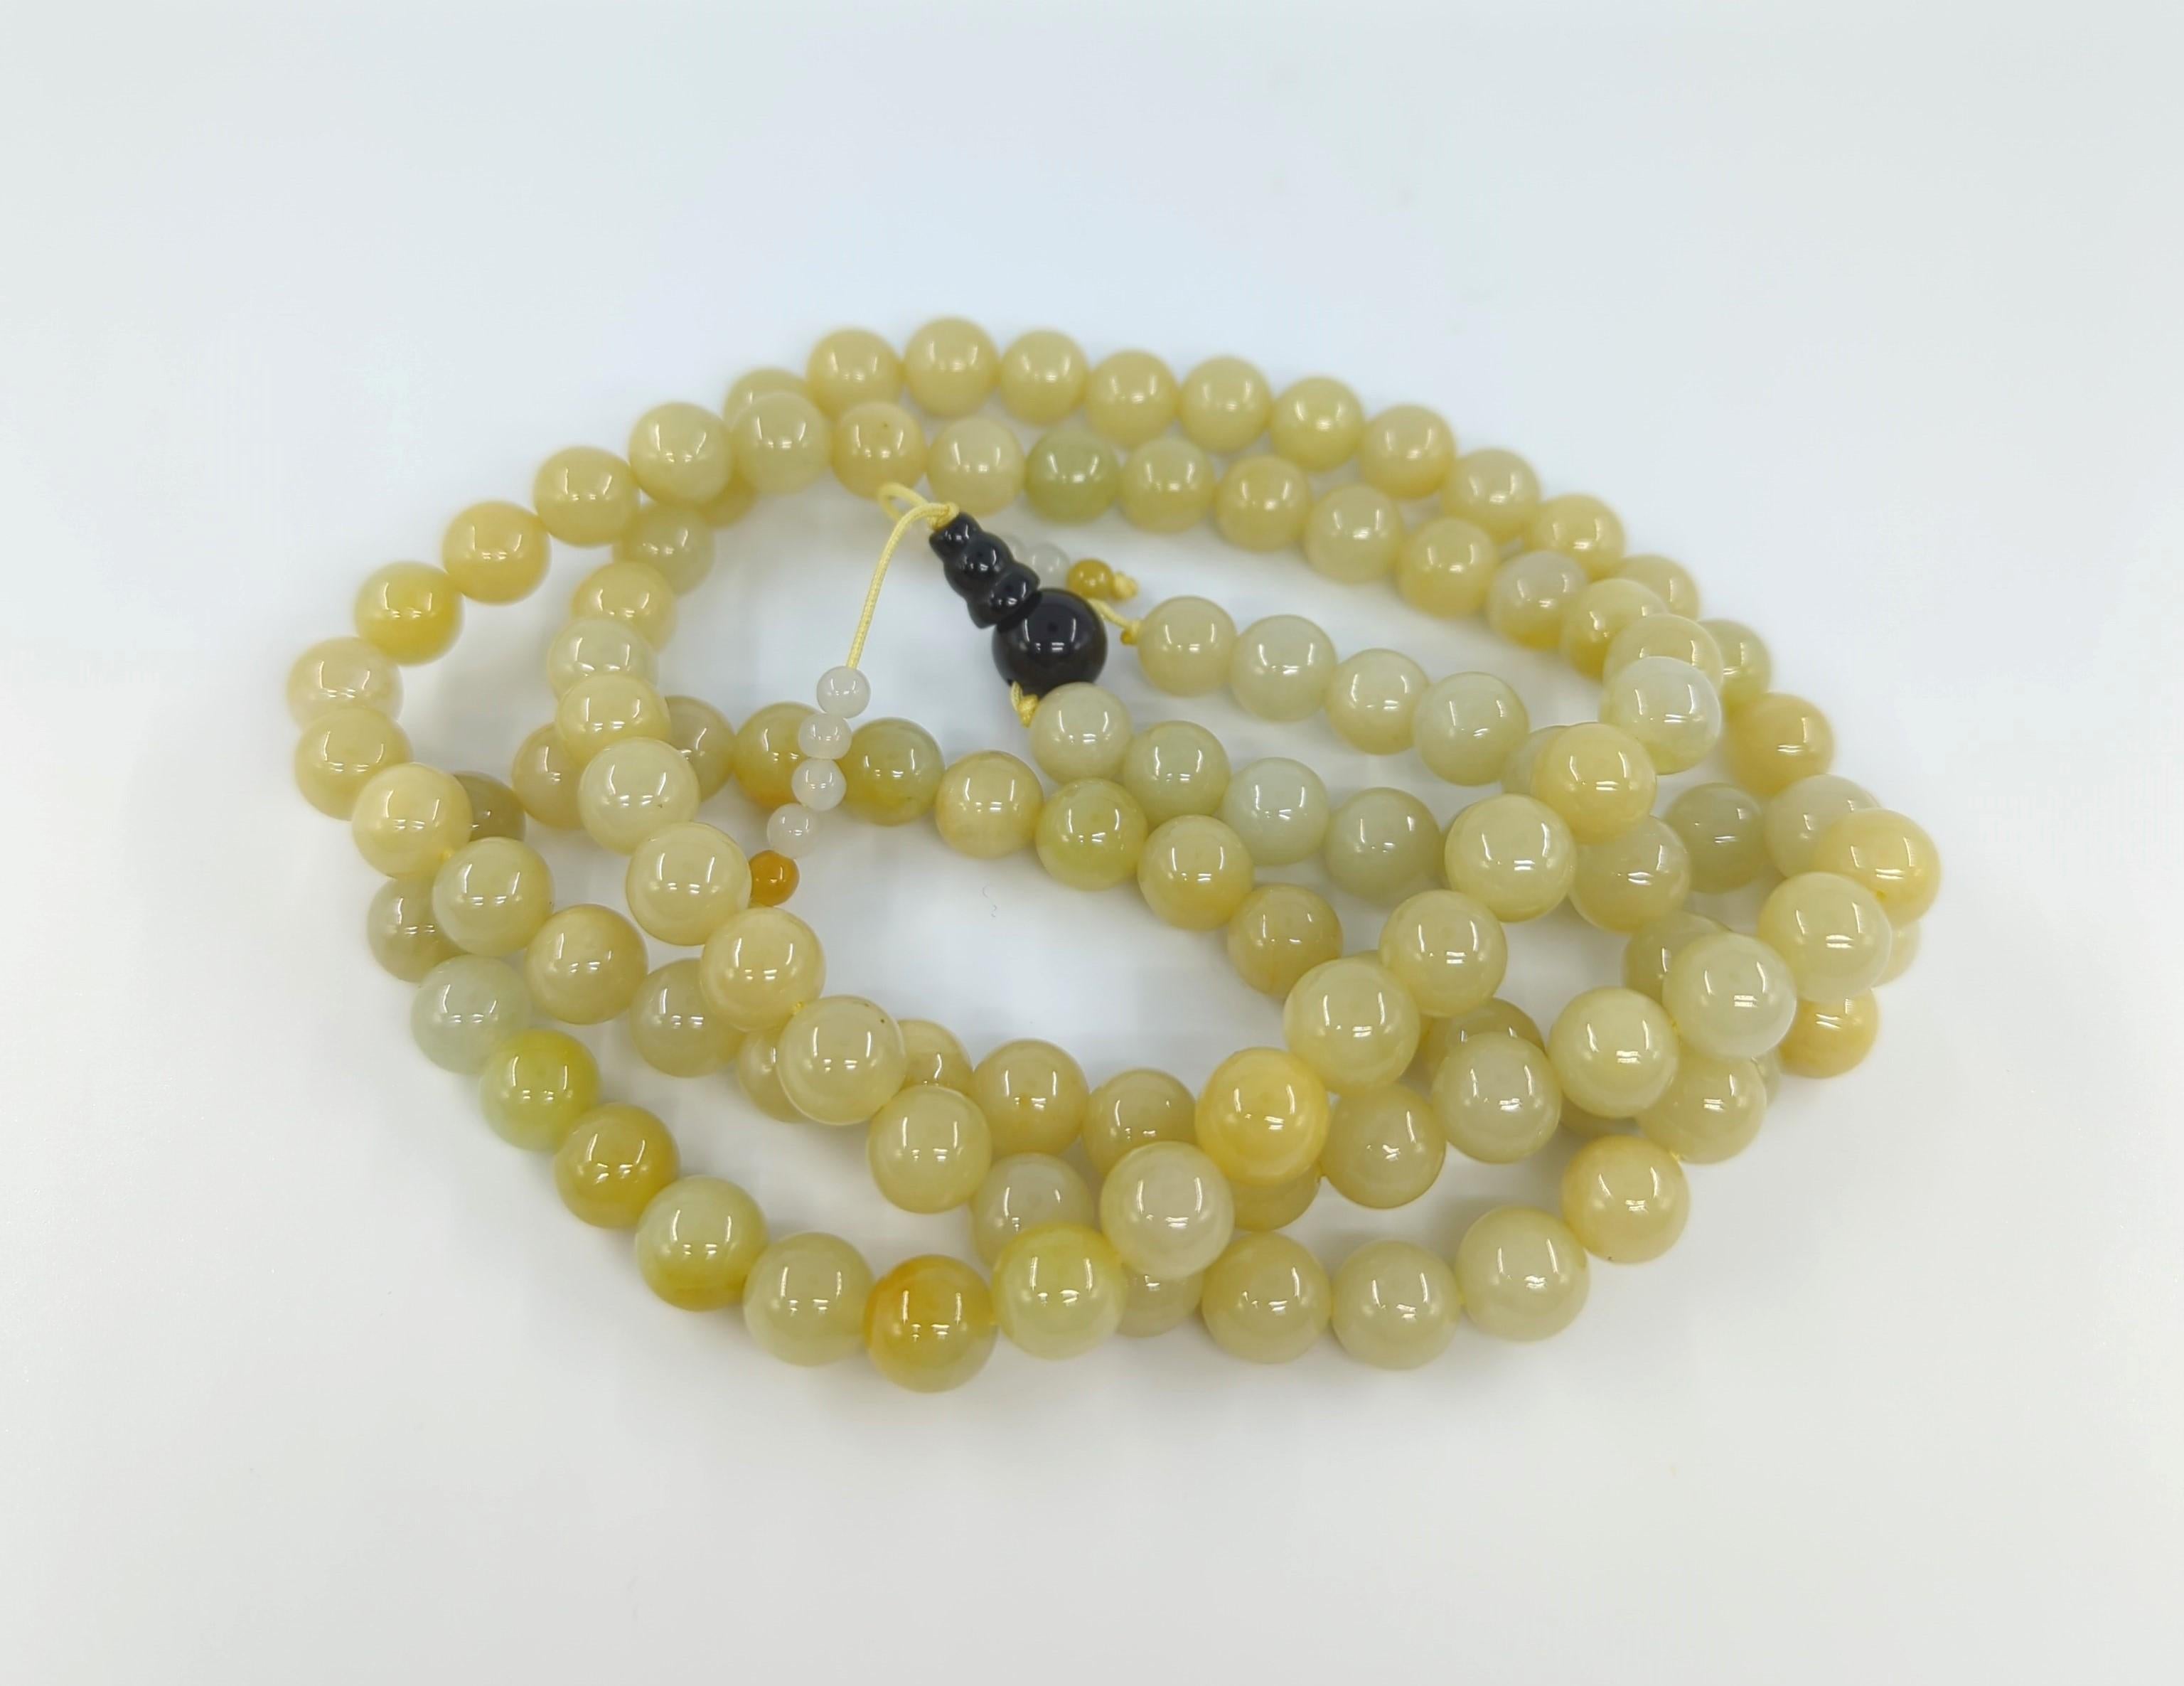 Women's Exquisite Chinese Yellow Jadeite Buddhist Meditation Beads 108pc A-Grade 40